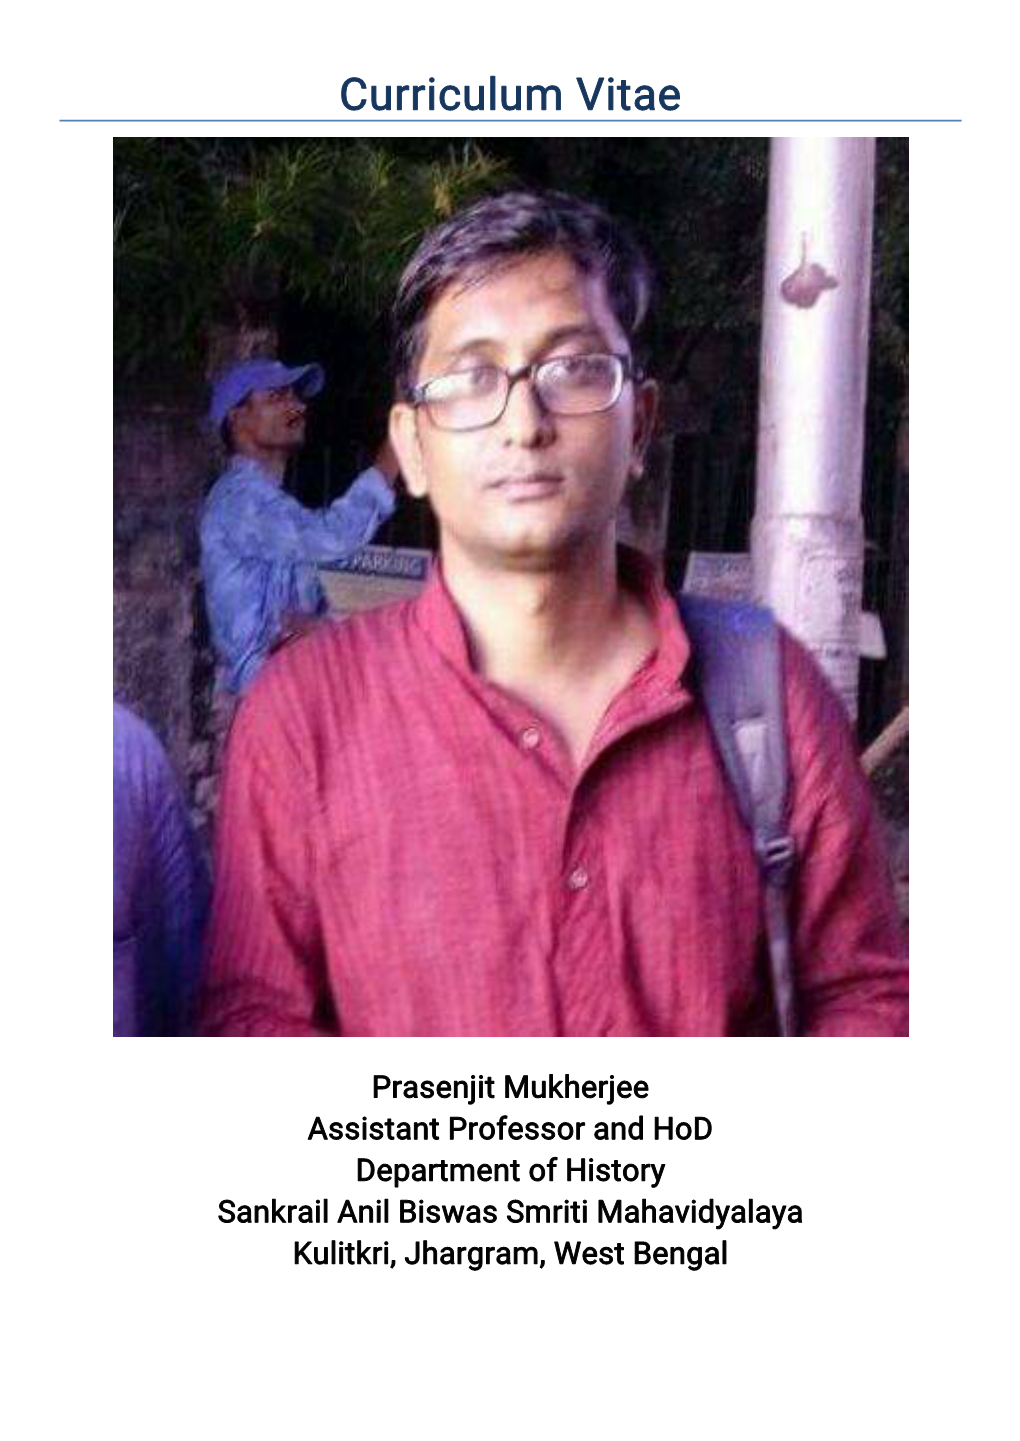 Prasenjit Mukherjee Assistant Professor and Hod Department of History Sankrail Anil Biswas Smriti Mahavidyalaya Kulitkri, Jhargram, West Bengal SR